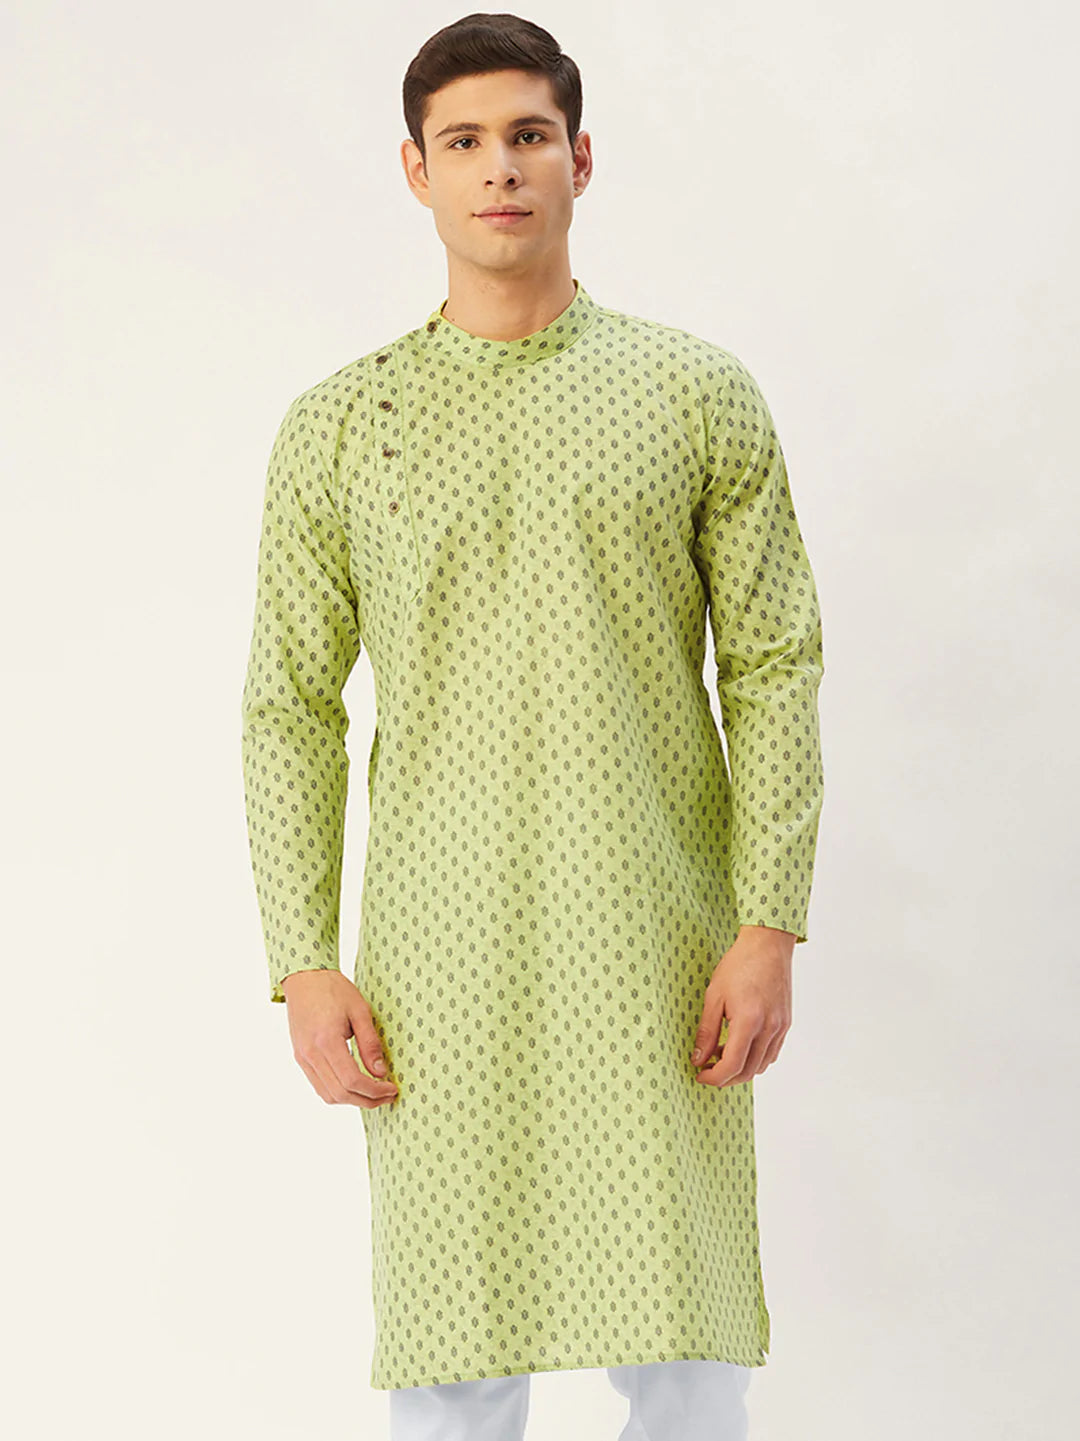 Jompers Men's Green Cotton printed kurta Only( KO 652 Green )